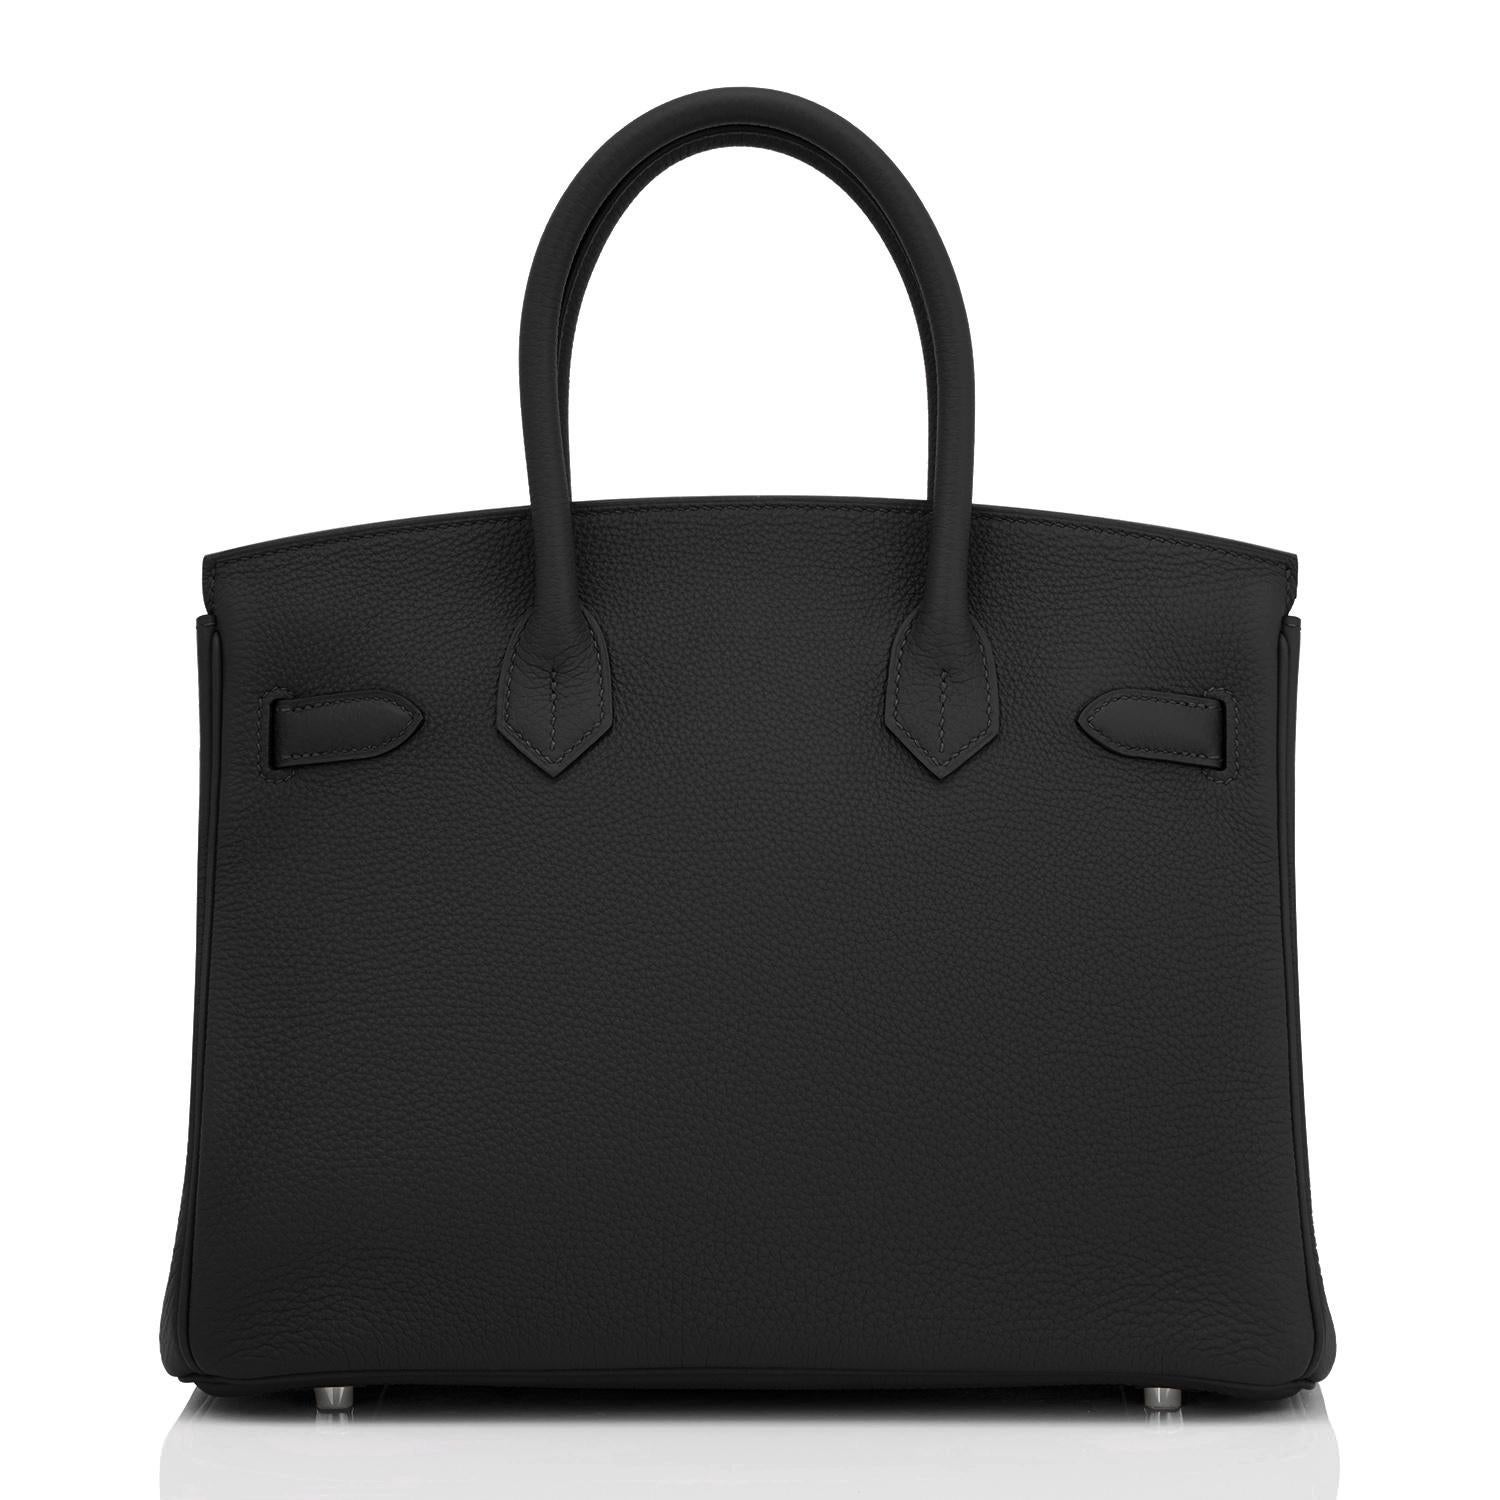 Hermes Birkin 30cm Black Togo Palladium Hardware Bag NEW 2